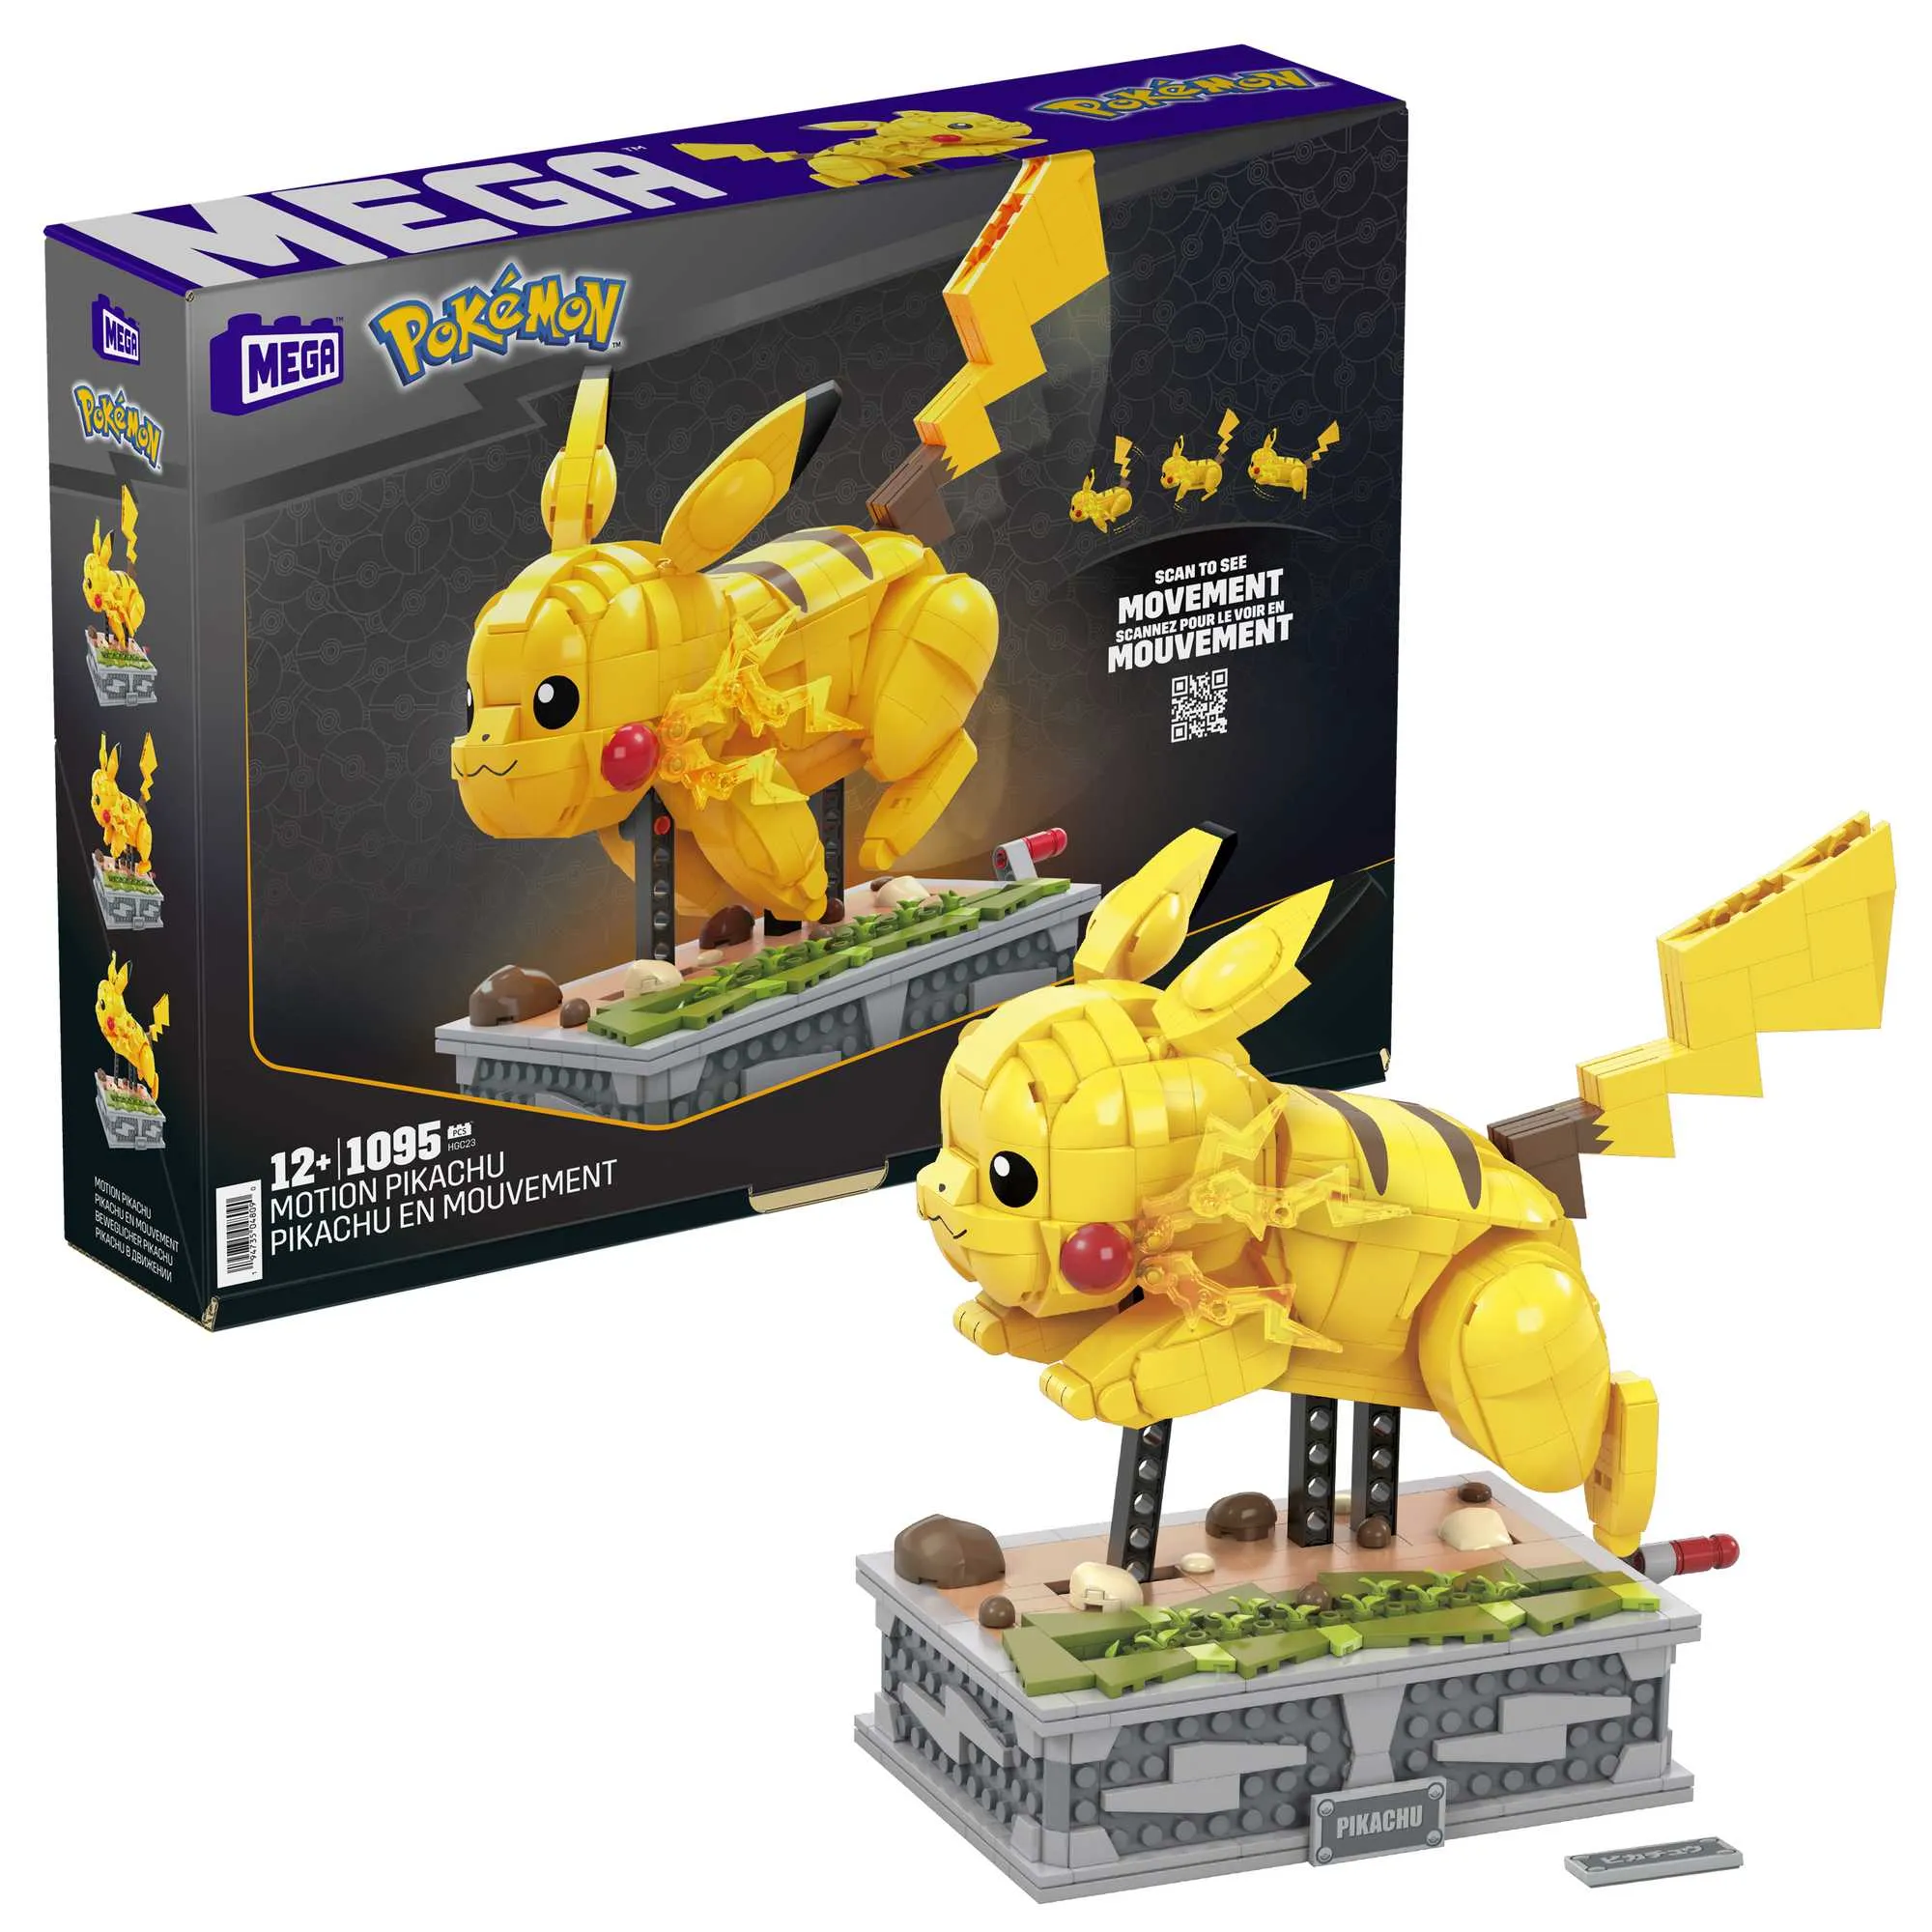 MEGA Construx - Pokémon Motion Pikachu bewegliches | Set HGC23